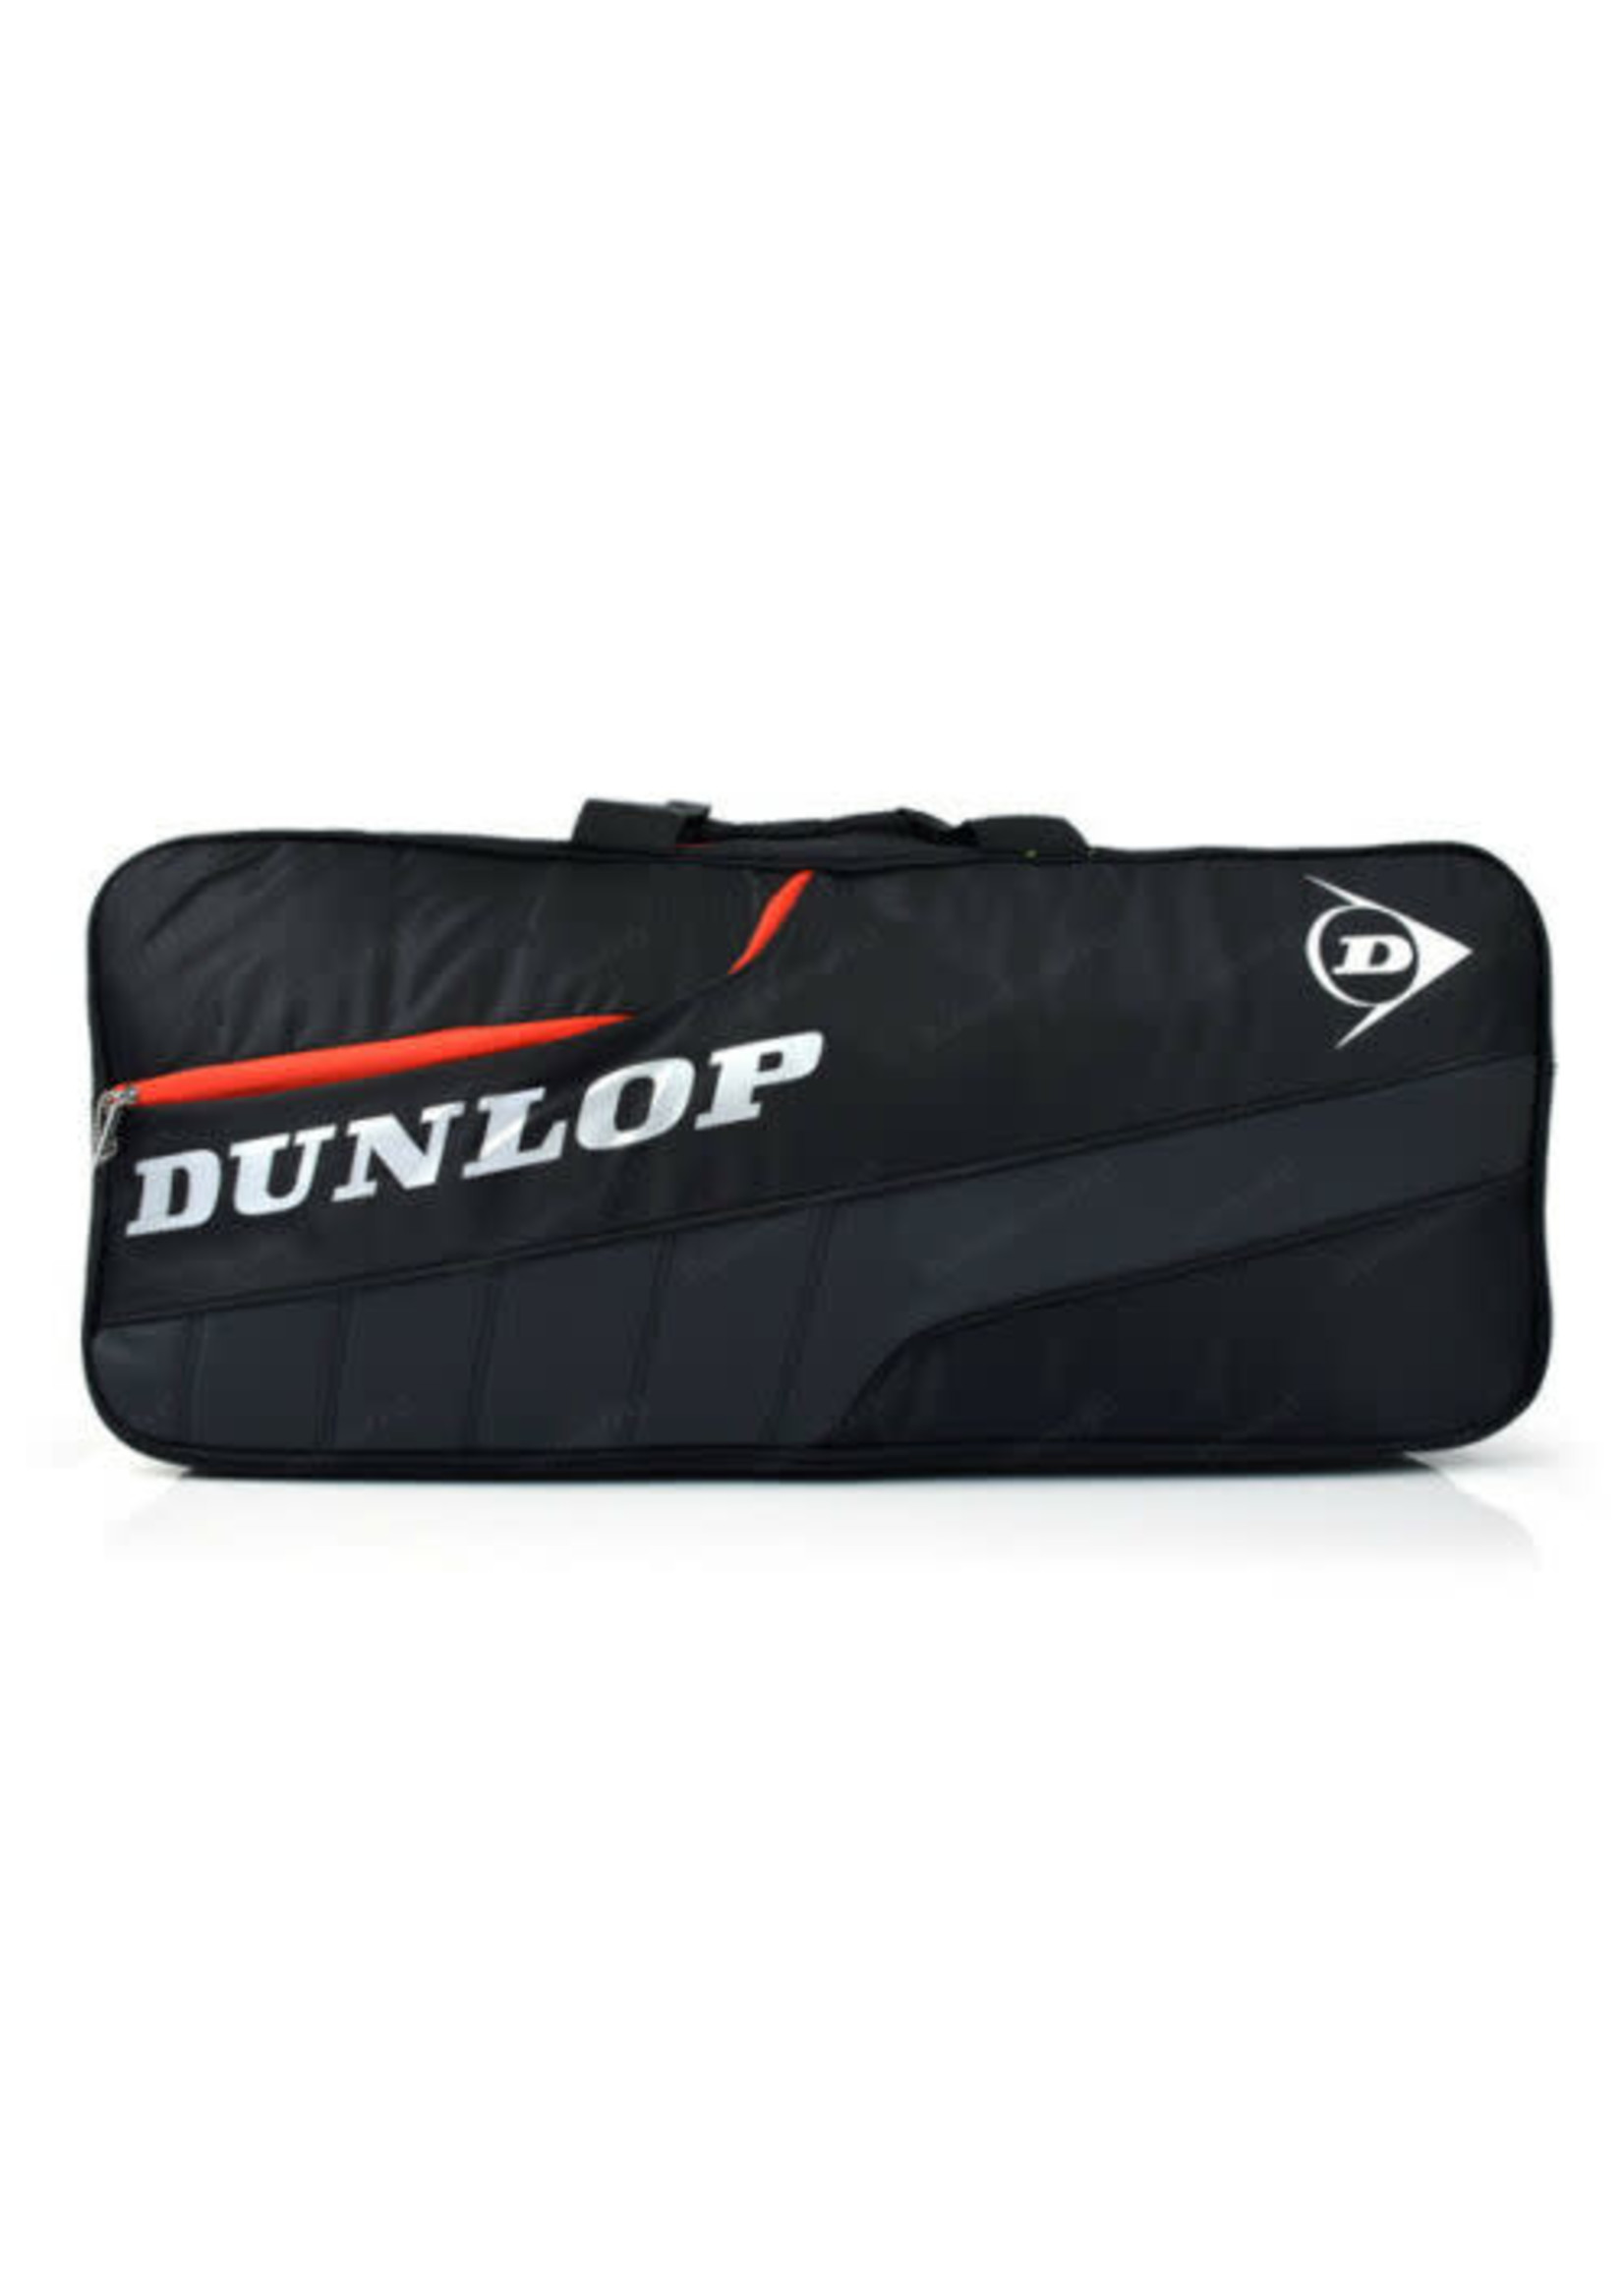 Dunlop Dunlop Elite Tournament Thermo Bag (2019)